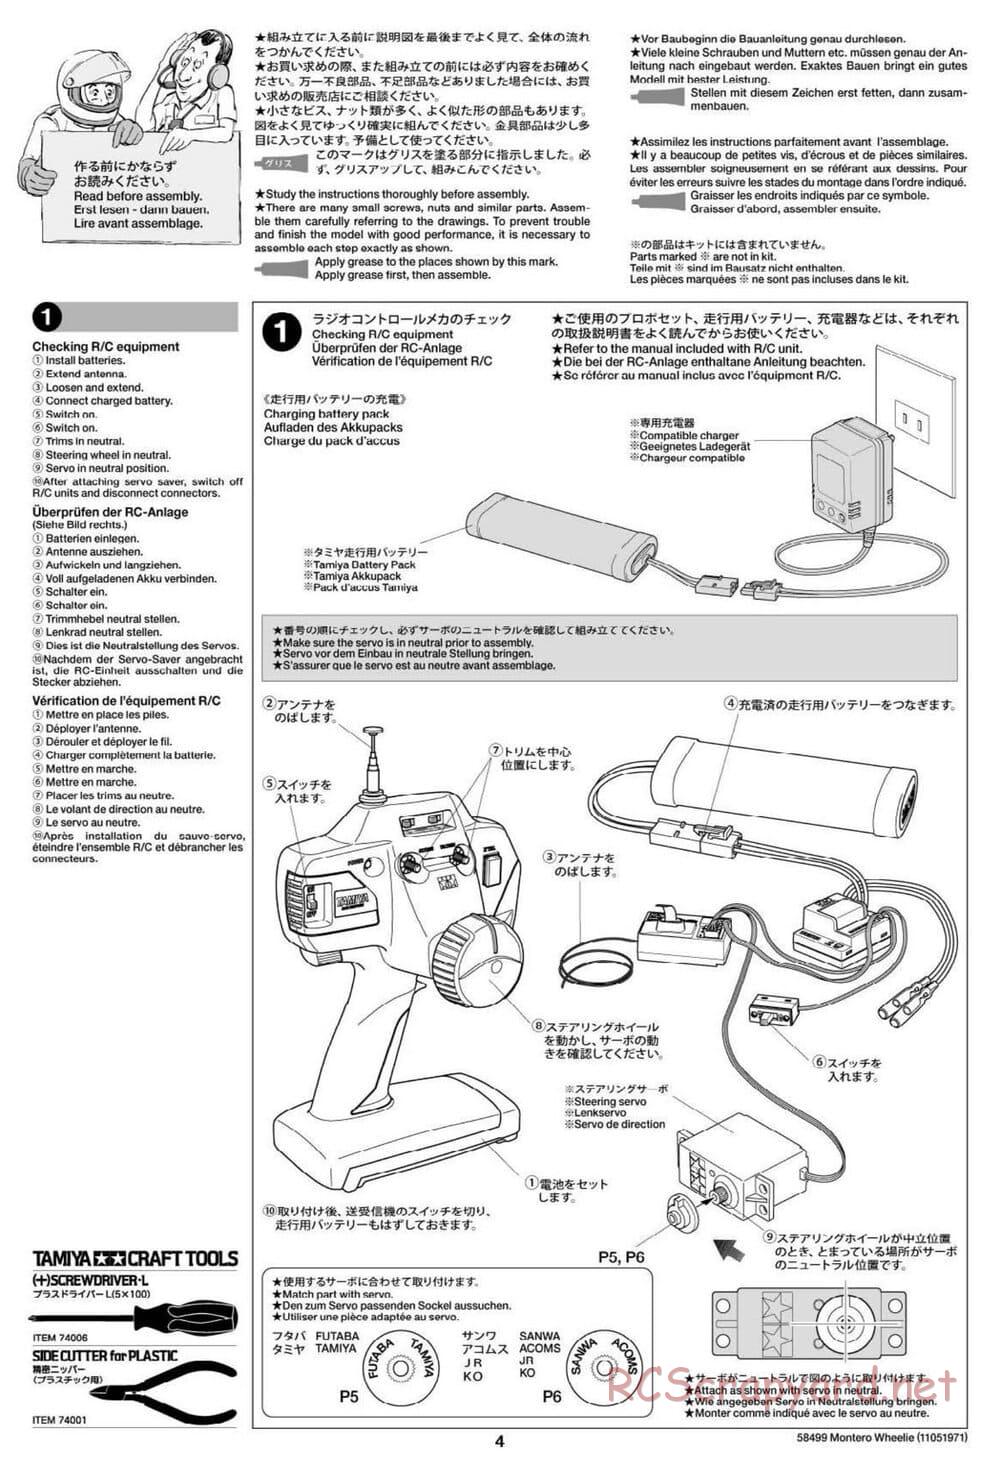 Tamiya - Mitsubishi Montero Wheelie - CW-01 Chassis - Manual - Page 4